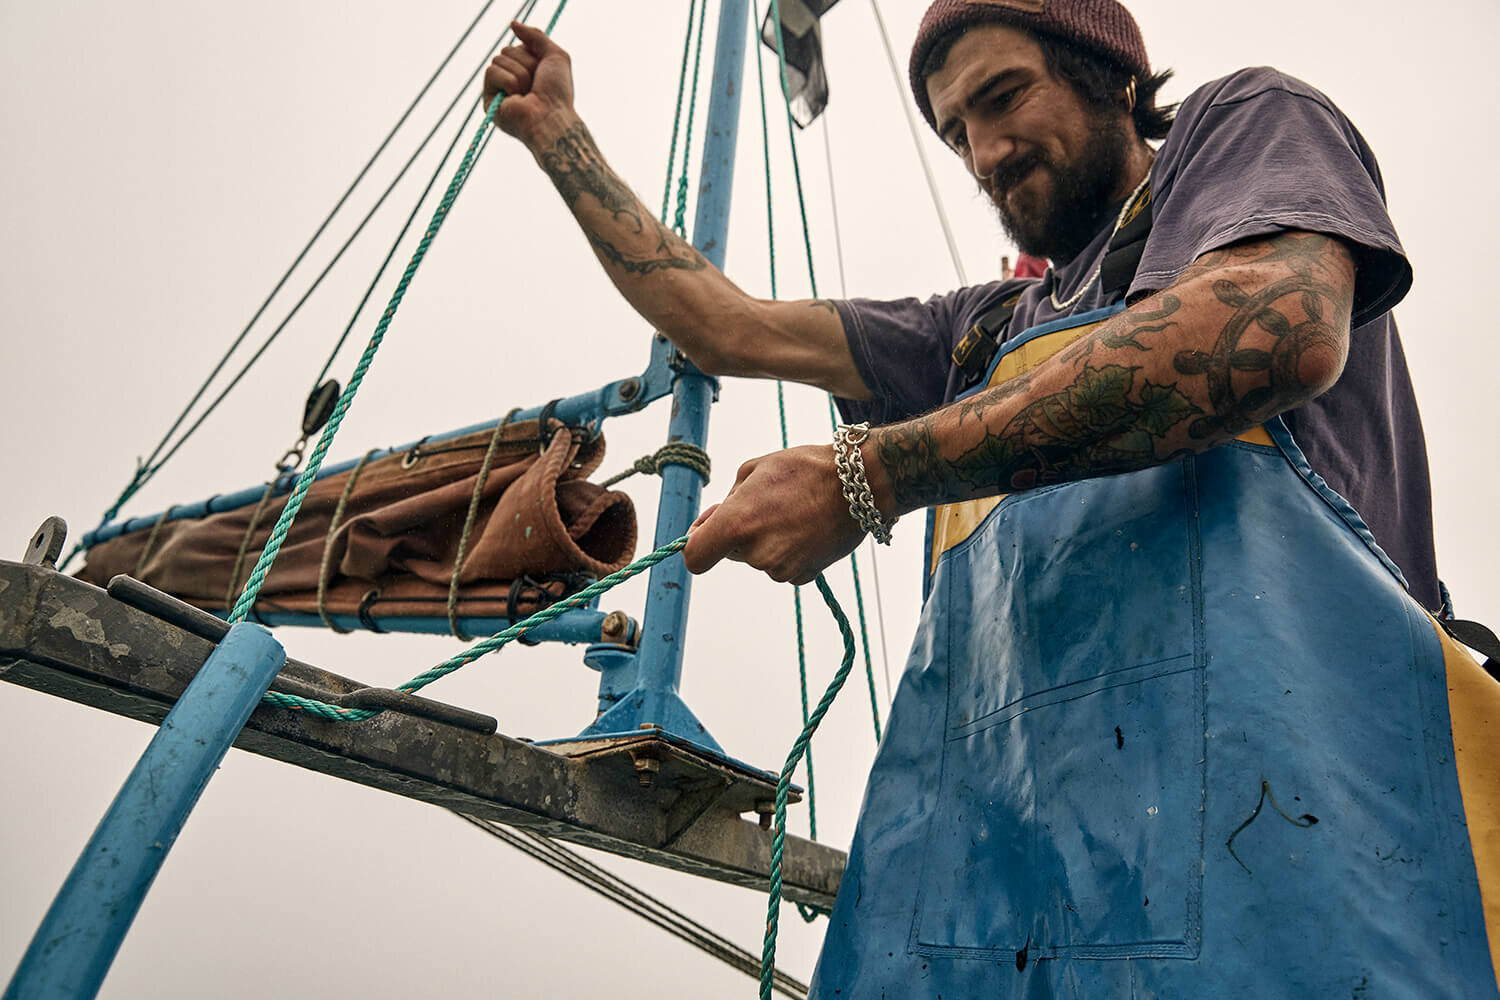 Fisherman pulling ropes on boat, wearing silver bracelet